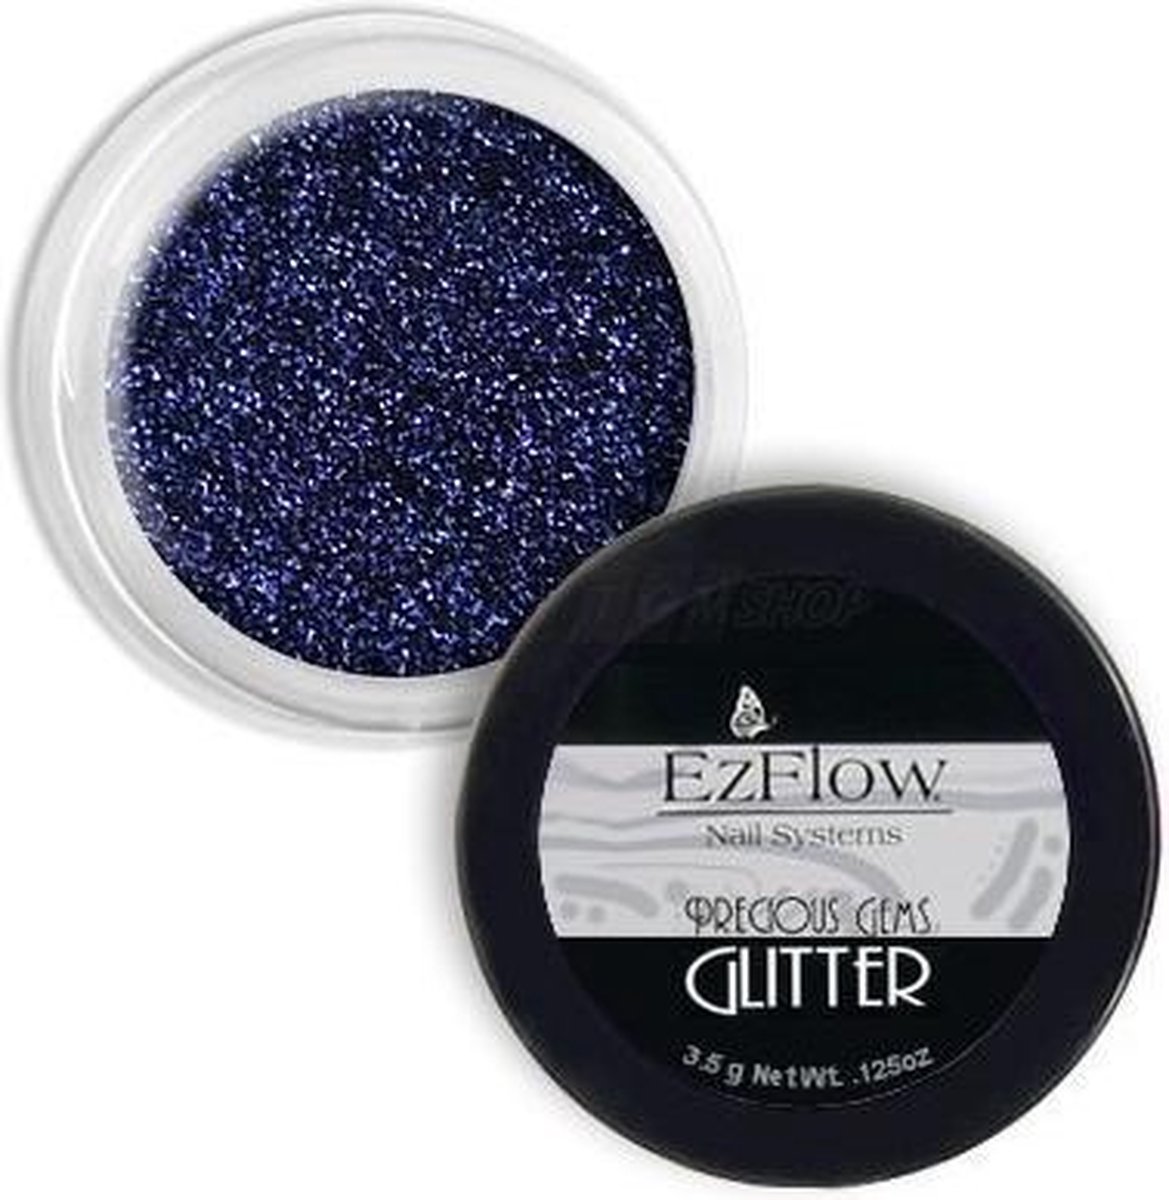 EzFlow Precious Gems Glitter - Amethyst - 0.125oz / 3.5g by EzFlow